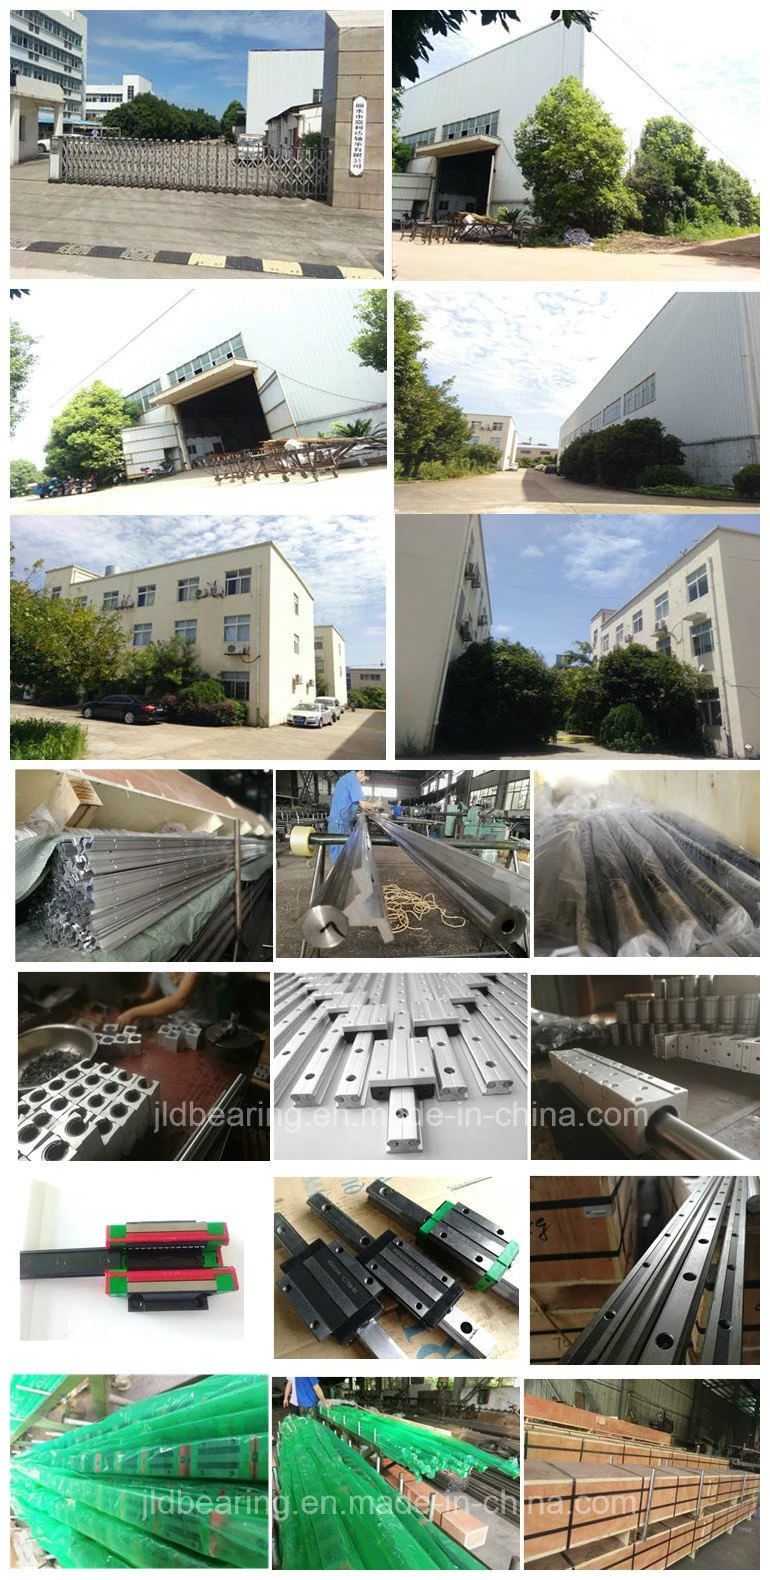 China Homemade CNC Linear Guide Way Bearing (SBR Series 16/20/25/30mm)